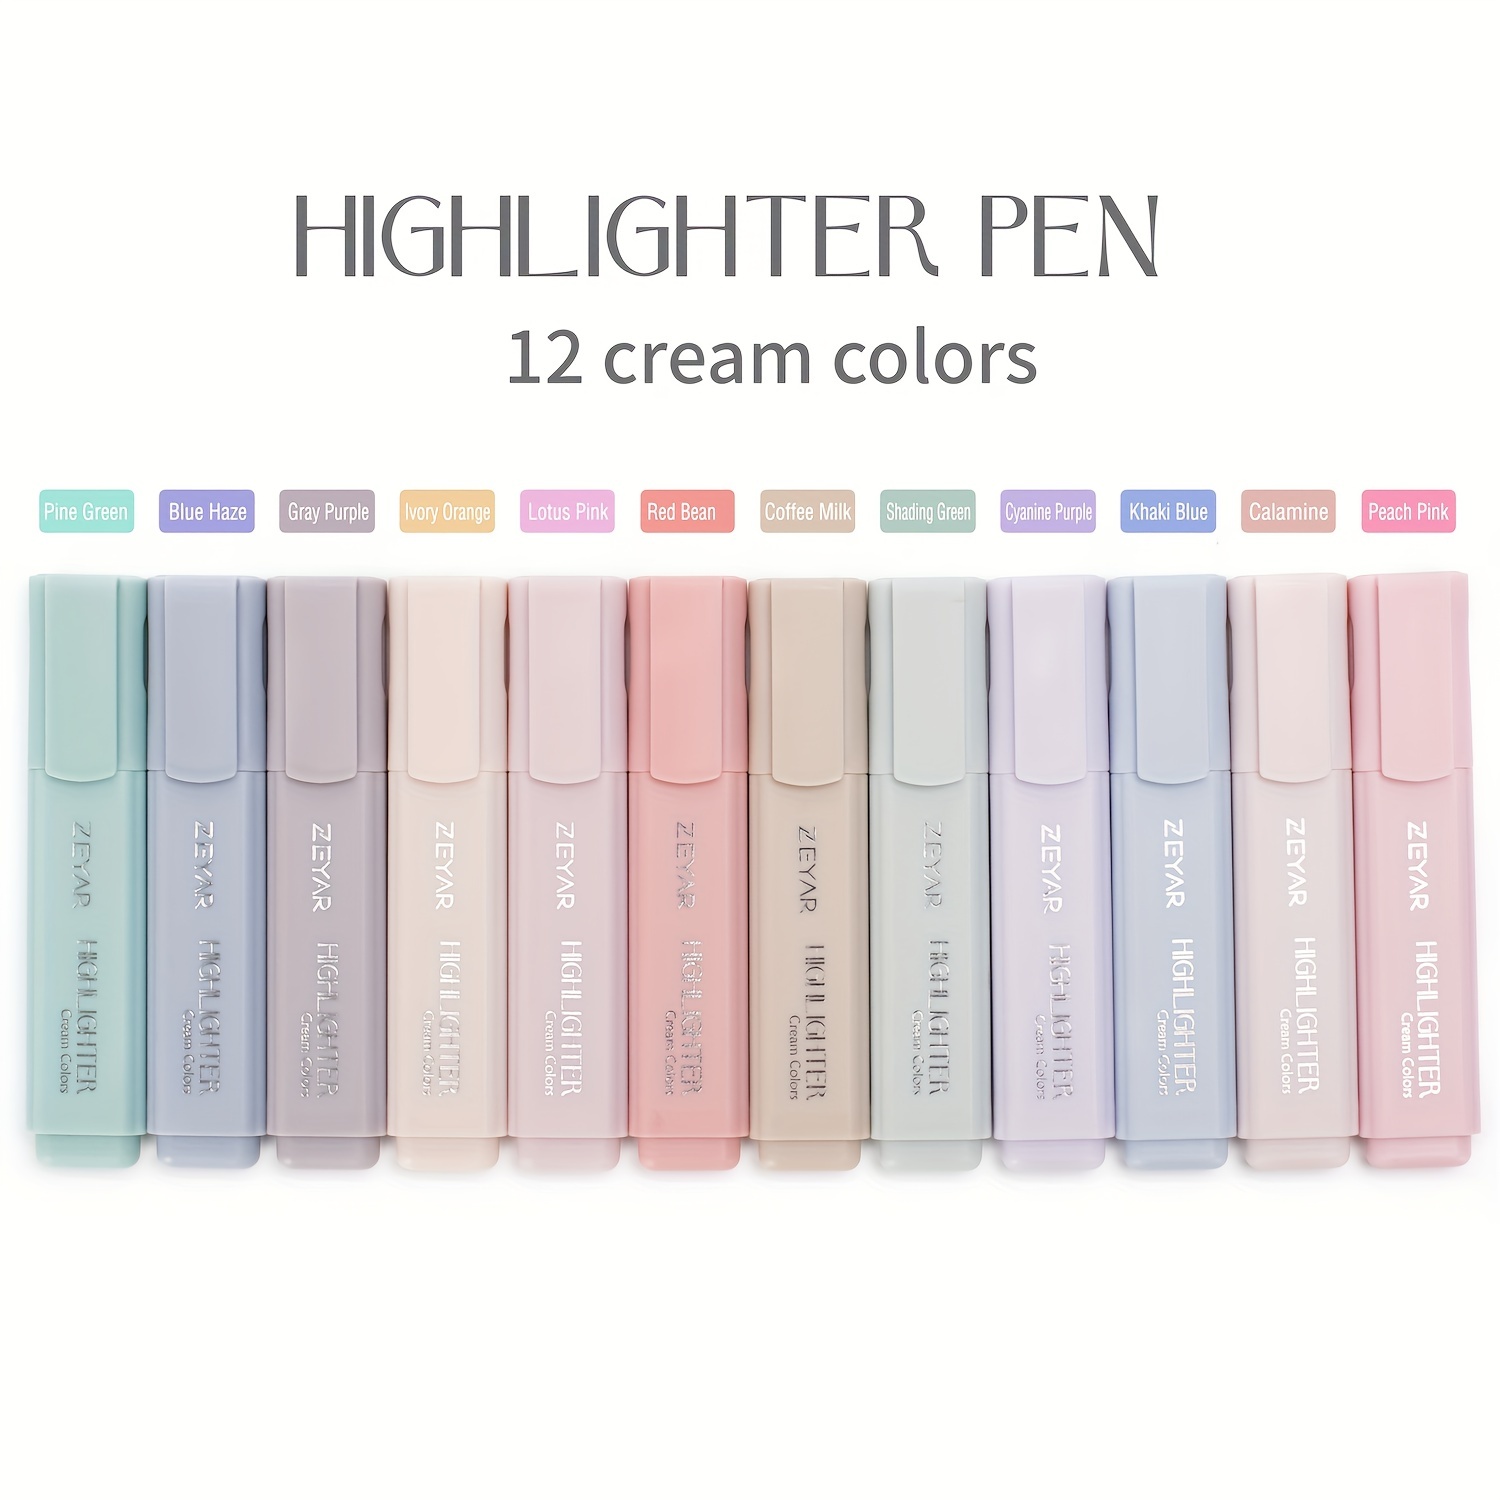 Zeyar Highlighters Creams colors of 12